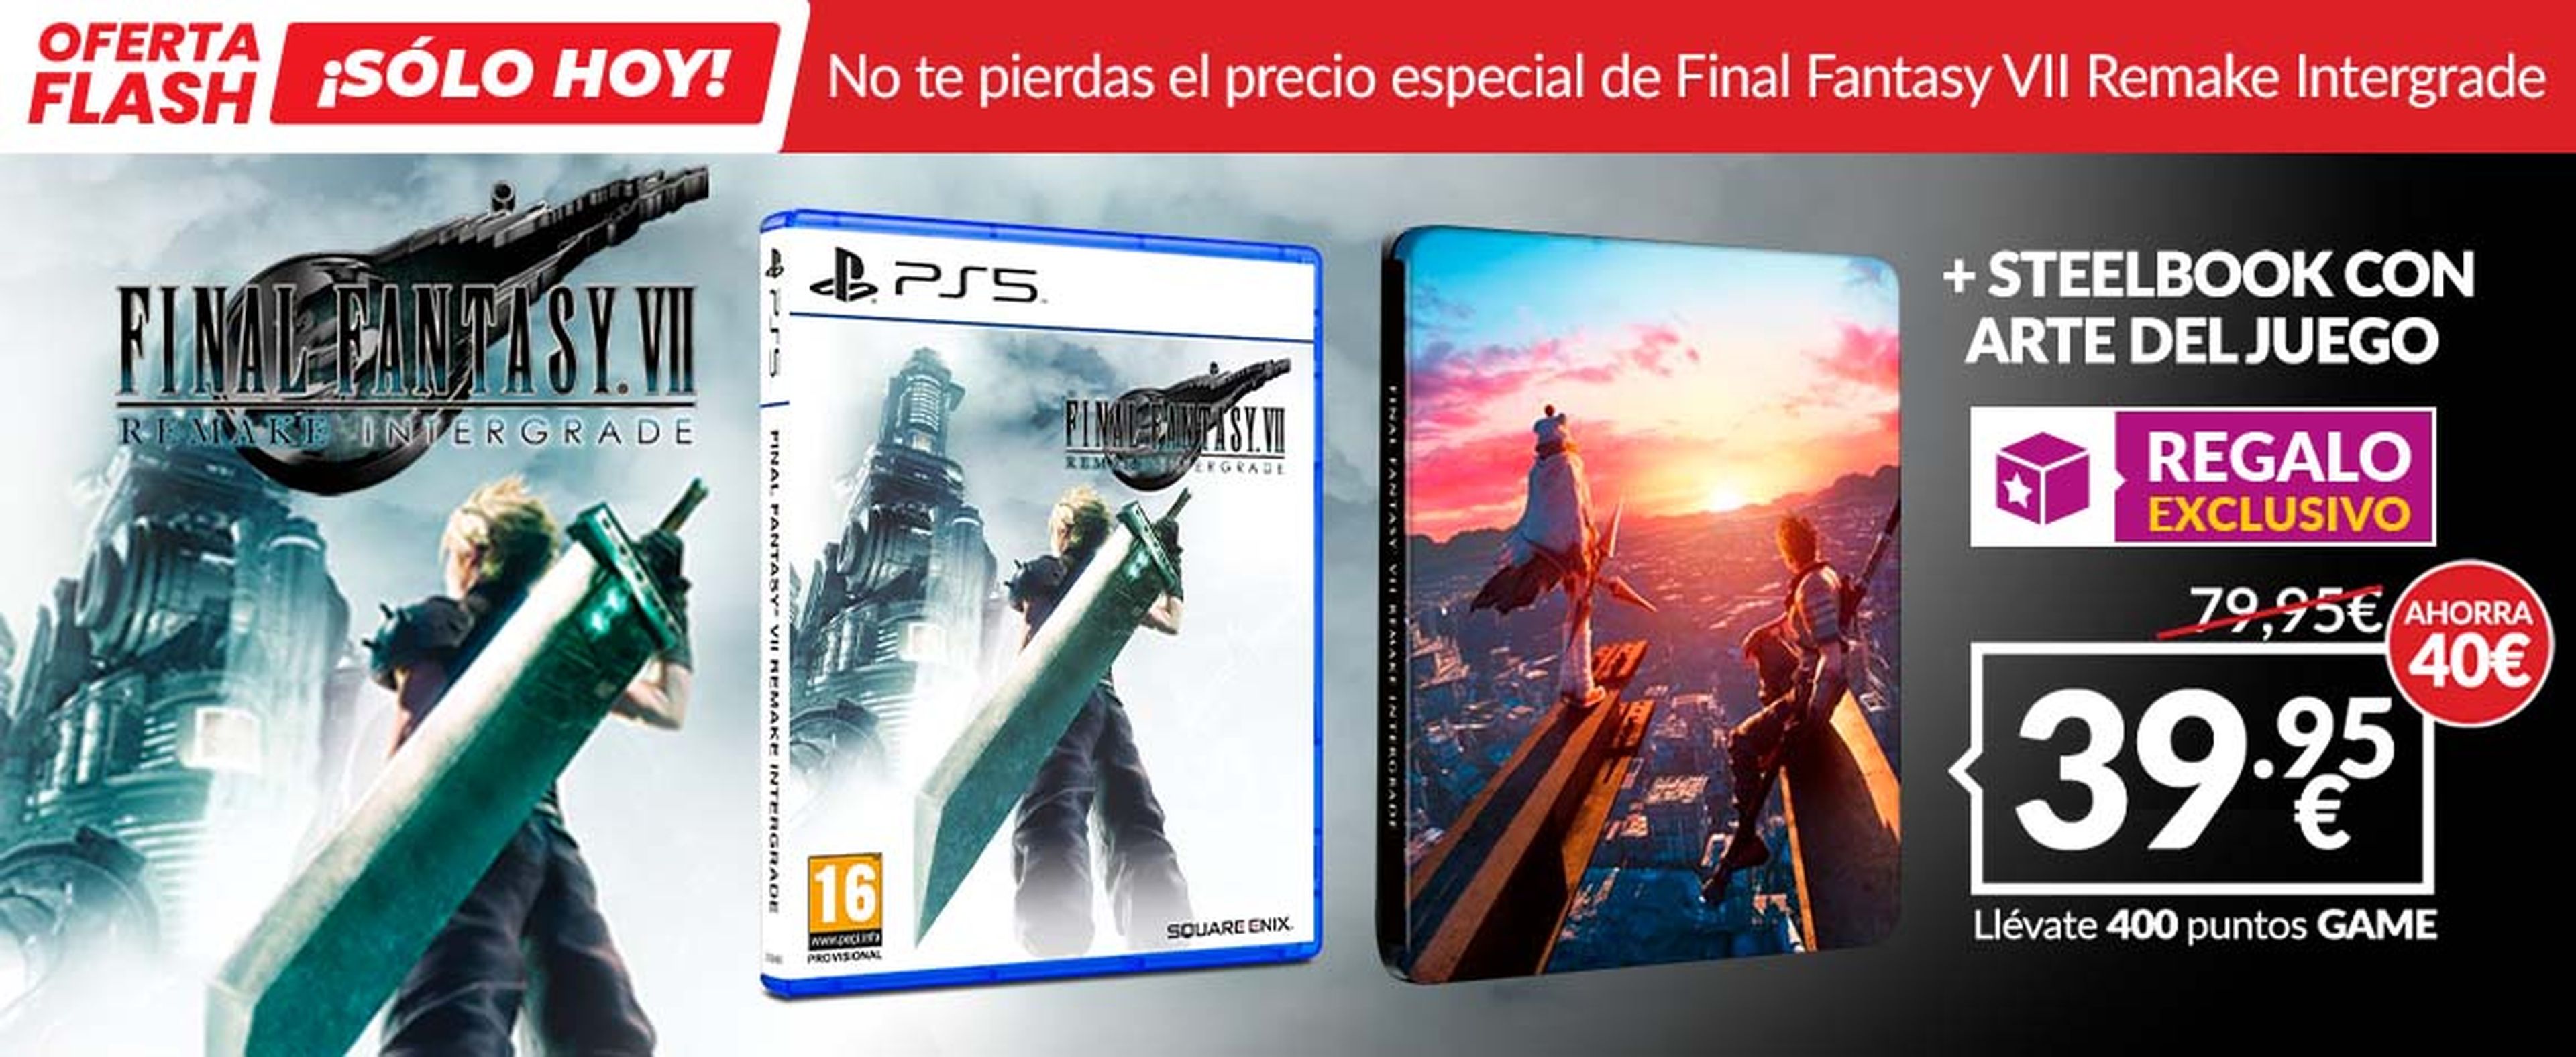 Oferta flash de GAME: Final Fantasy VII Remake Intergrade para PS5